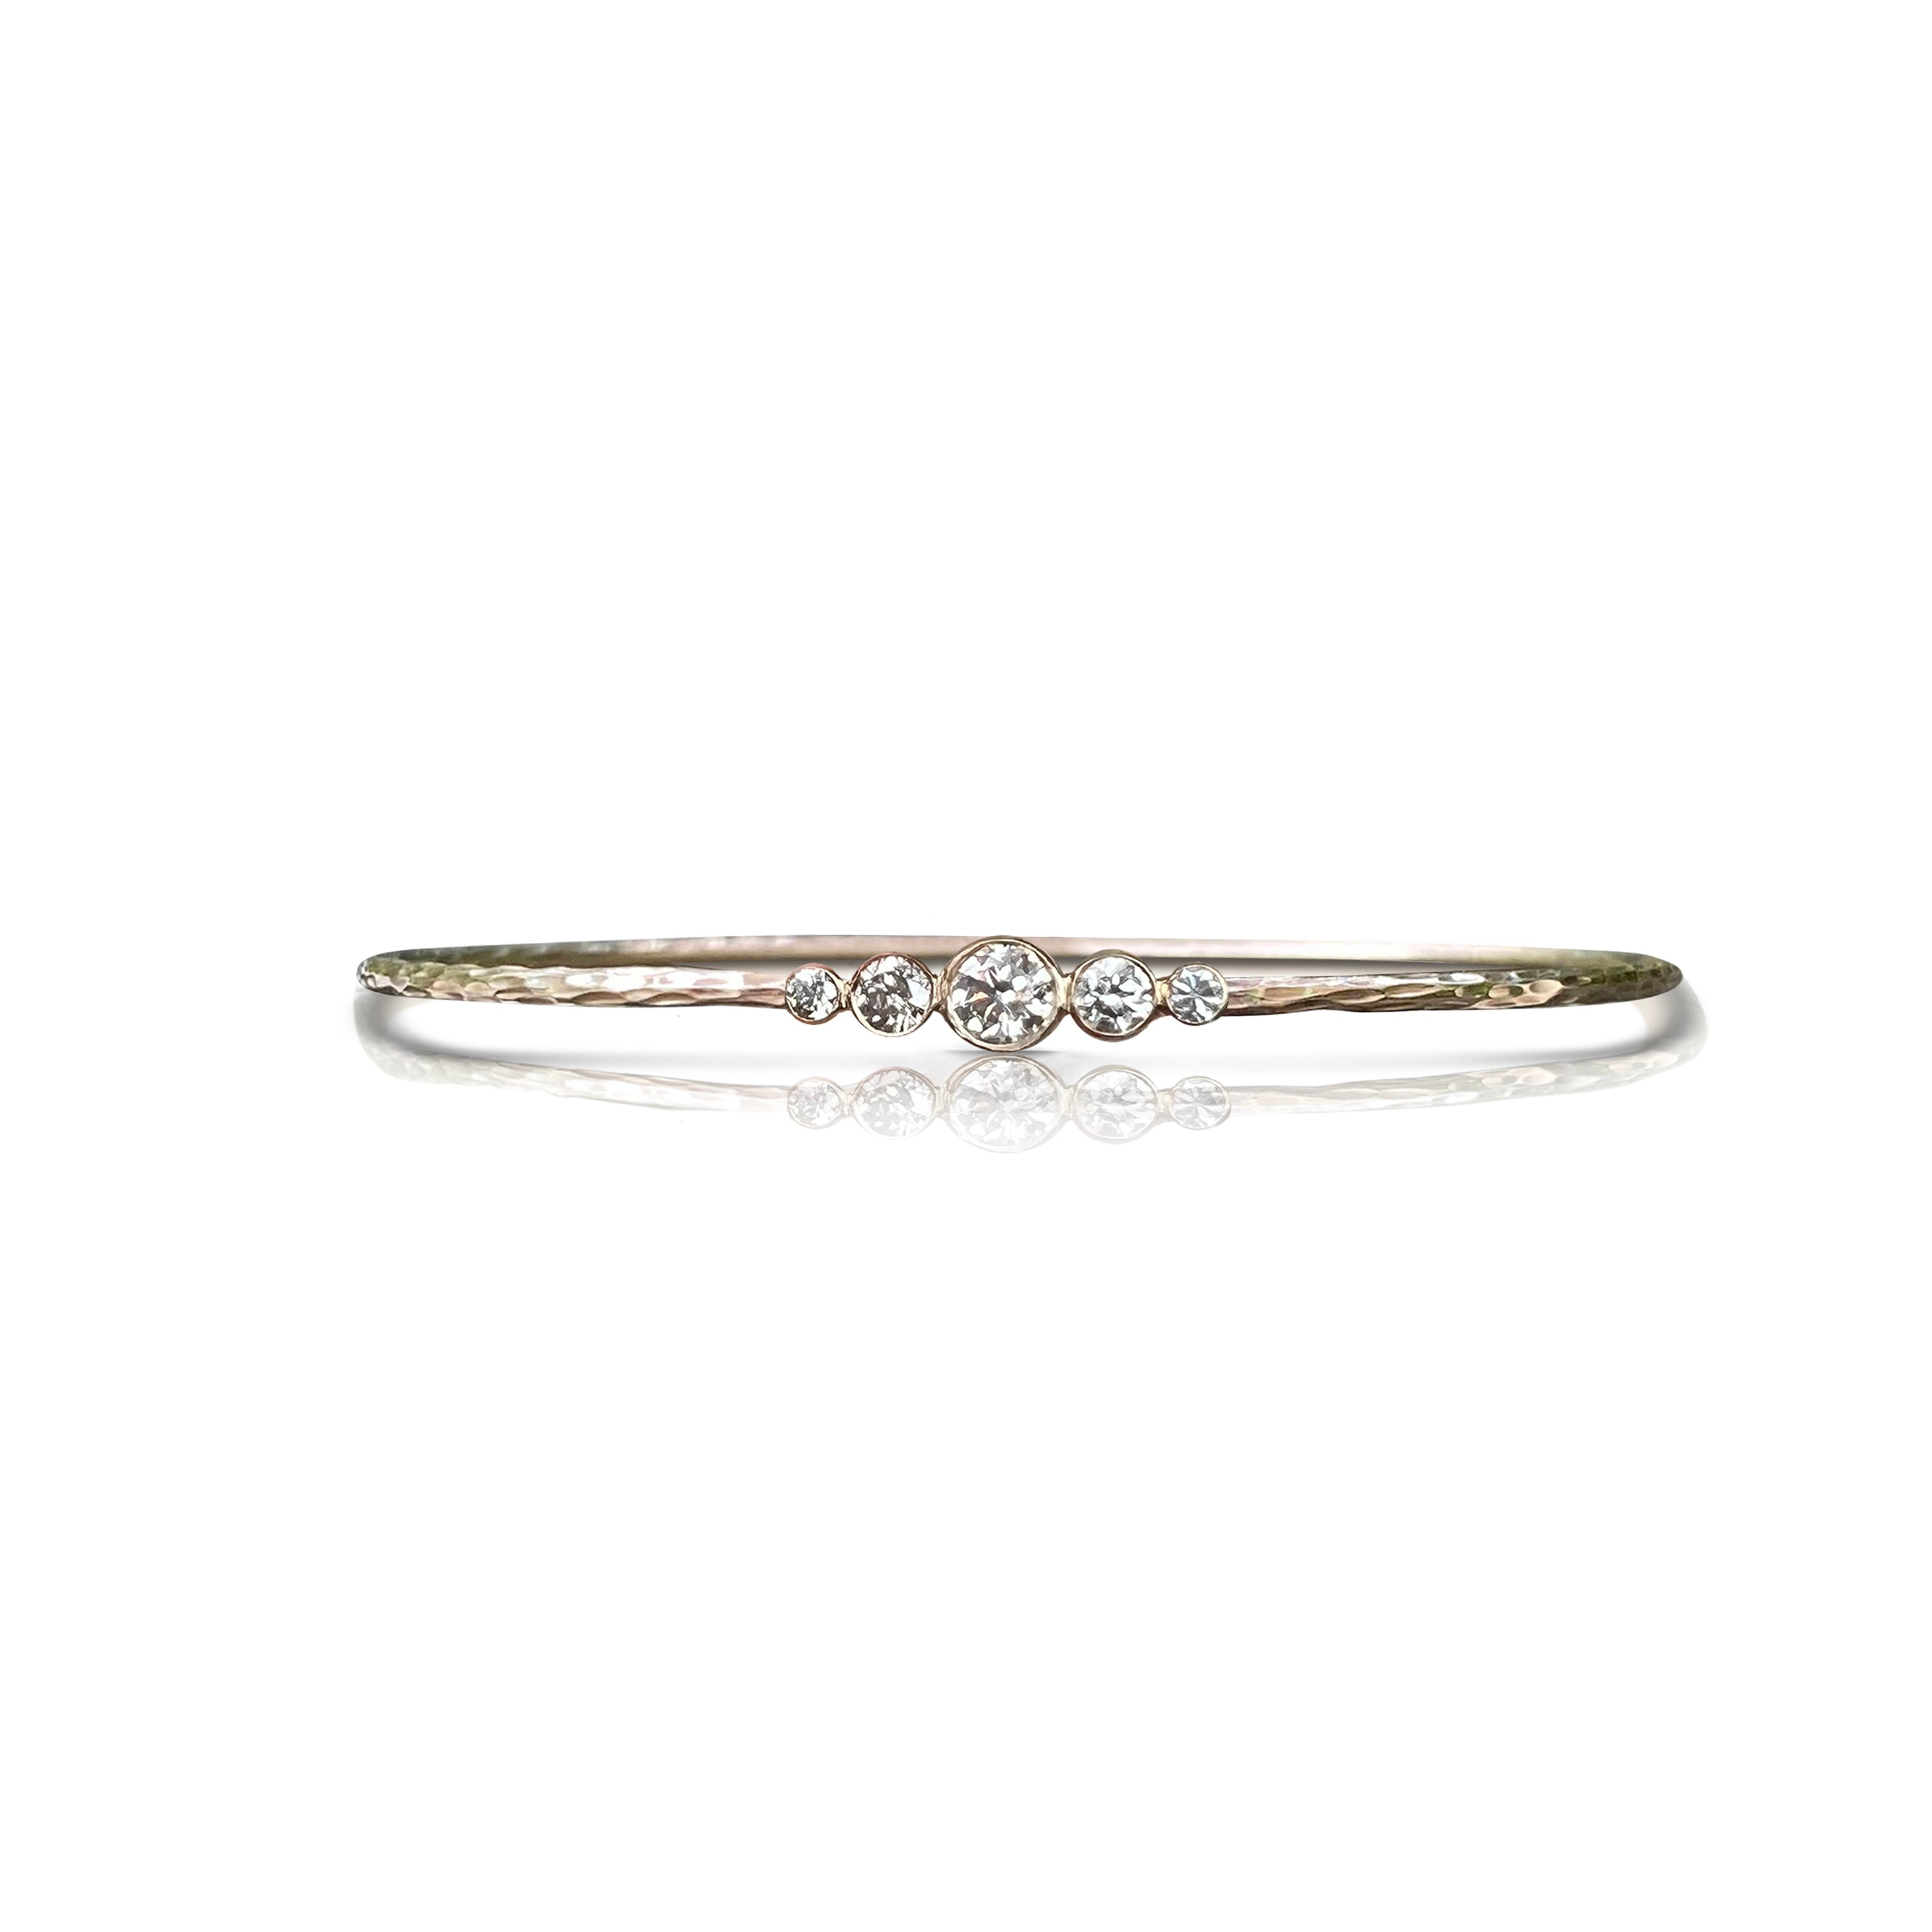 14k 5 Diamond Hammered Bezel Bracelet by S.Carter Designs